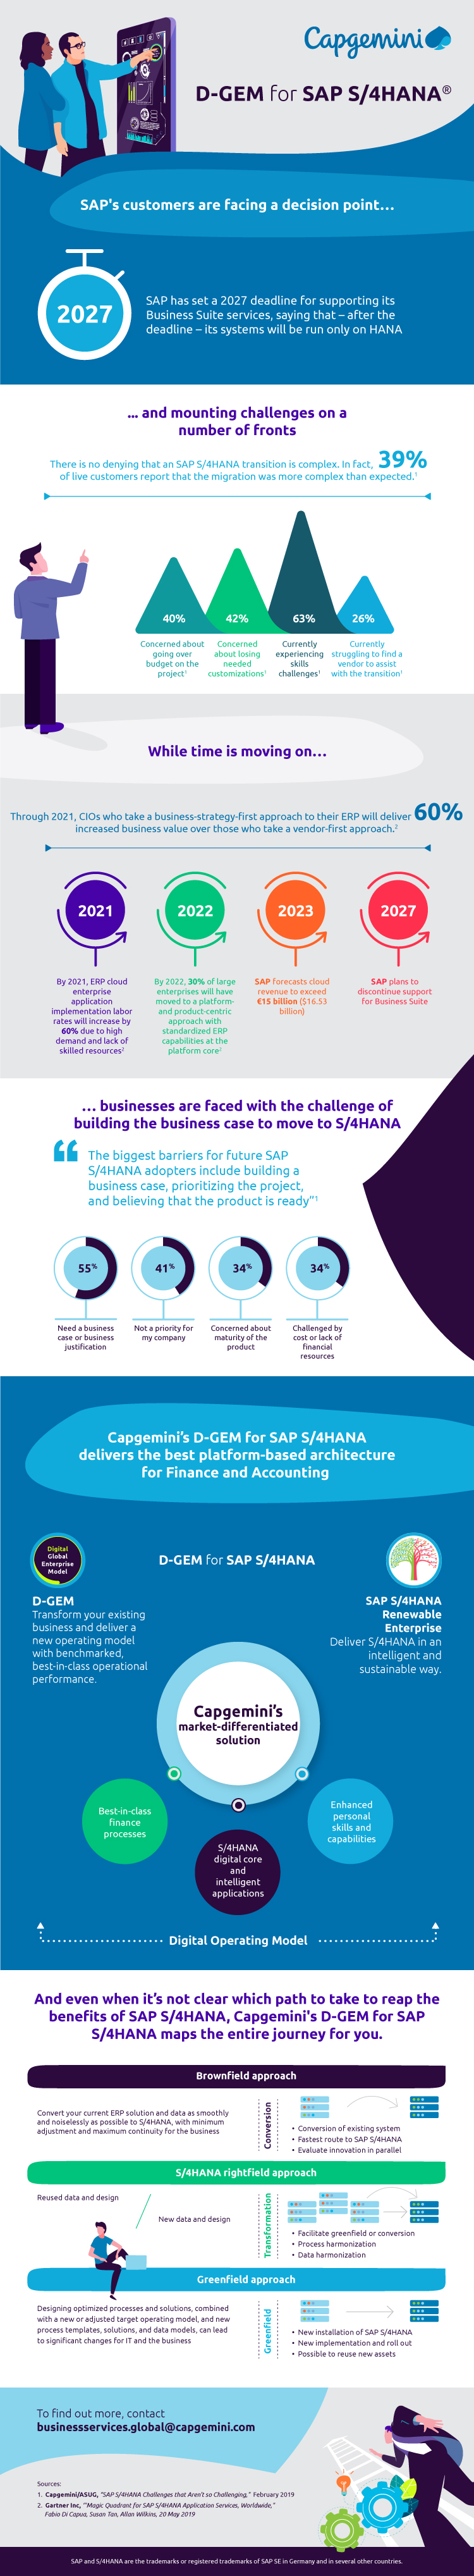 D-GEM for SAP S4HANA® - Infographic